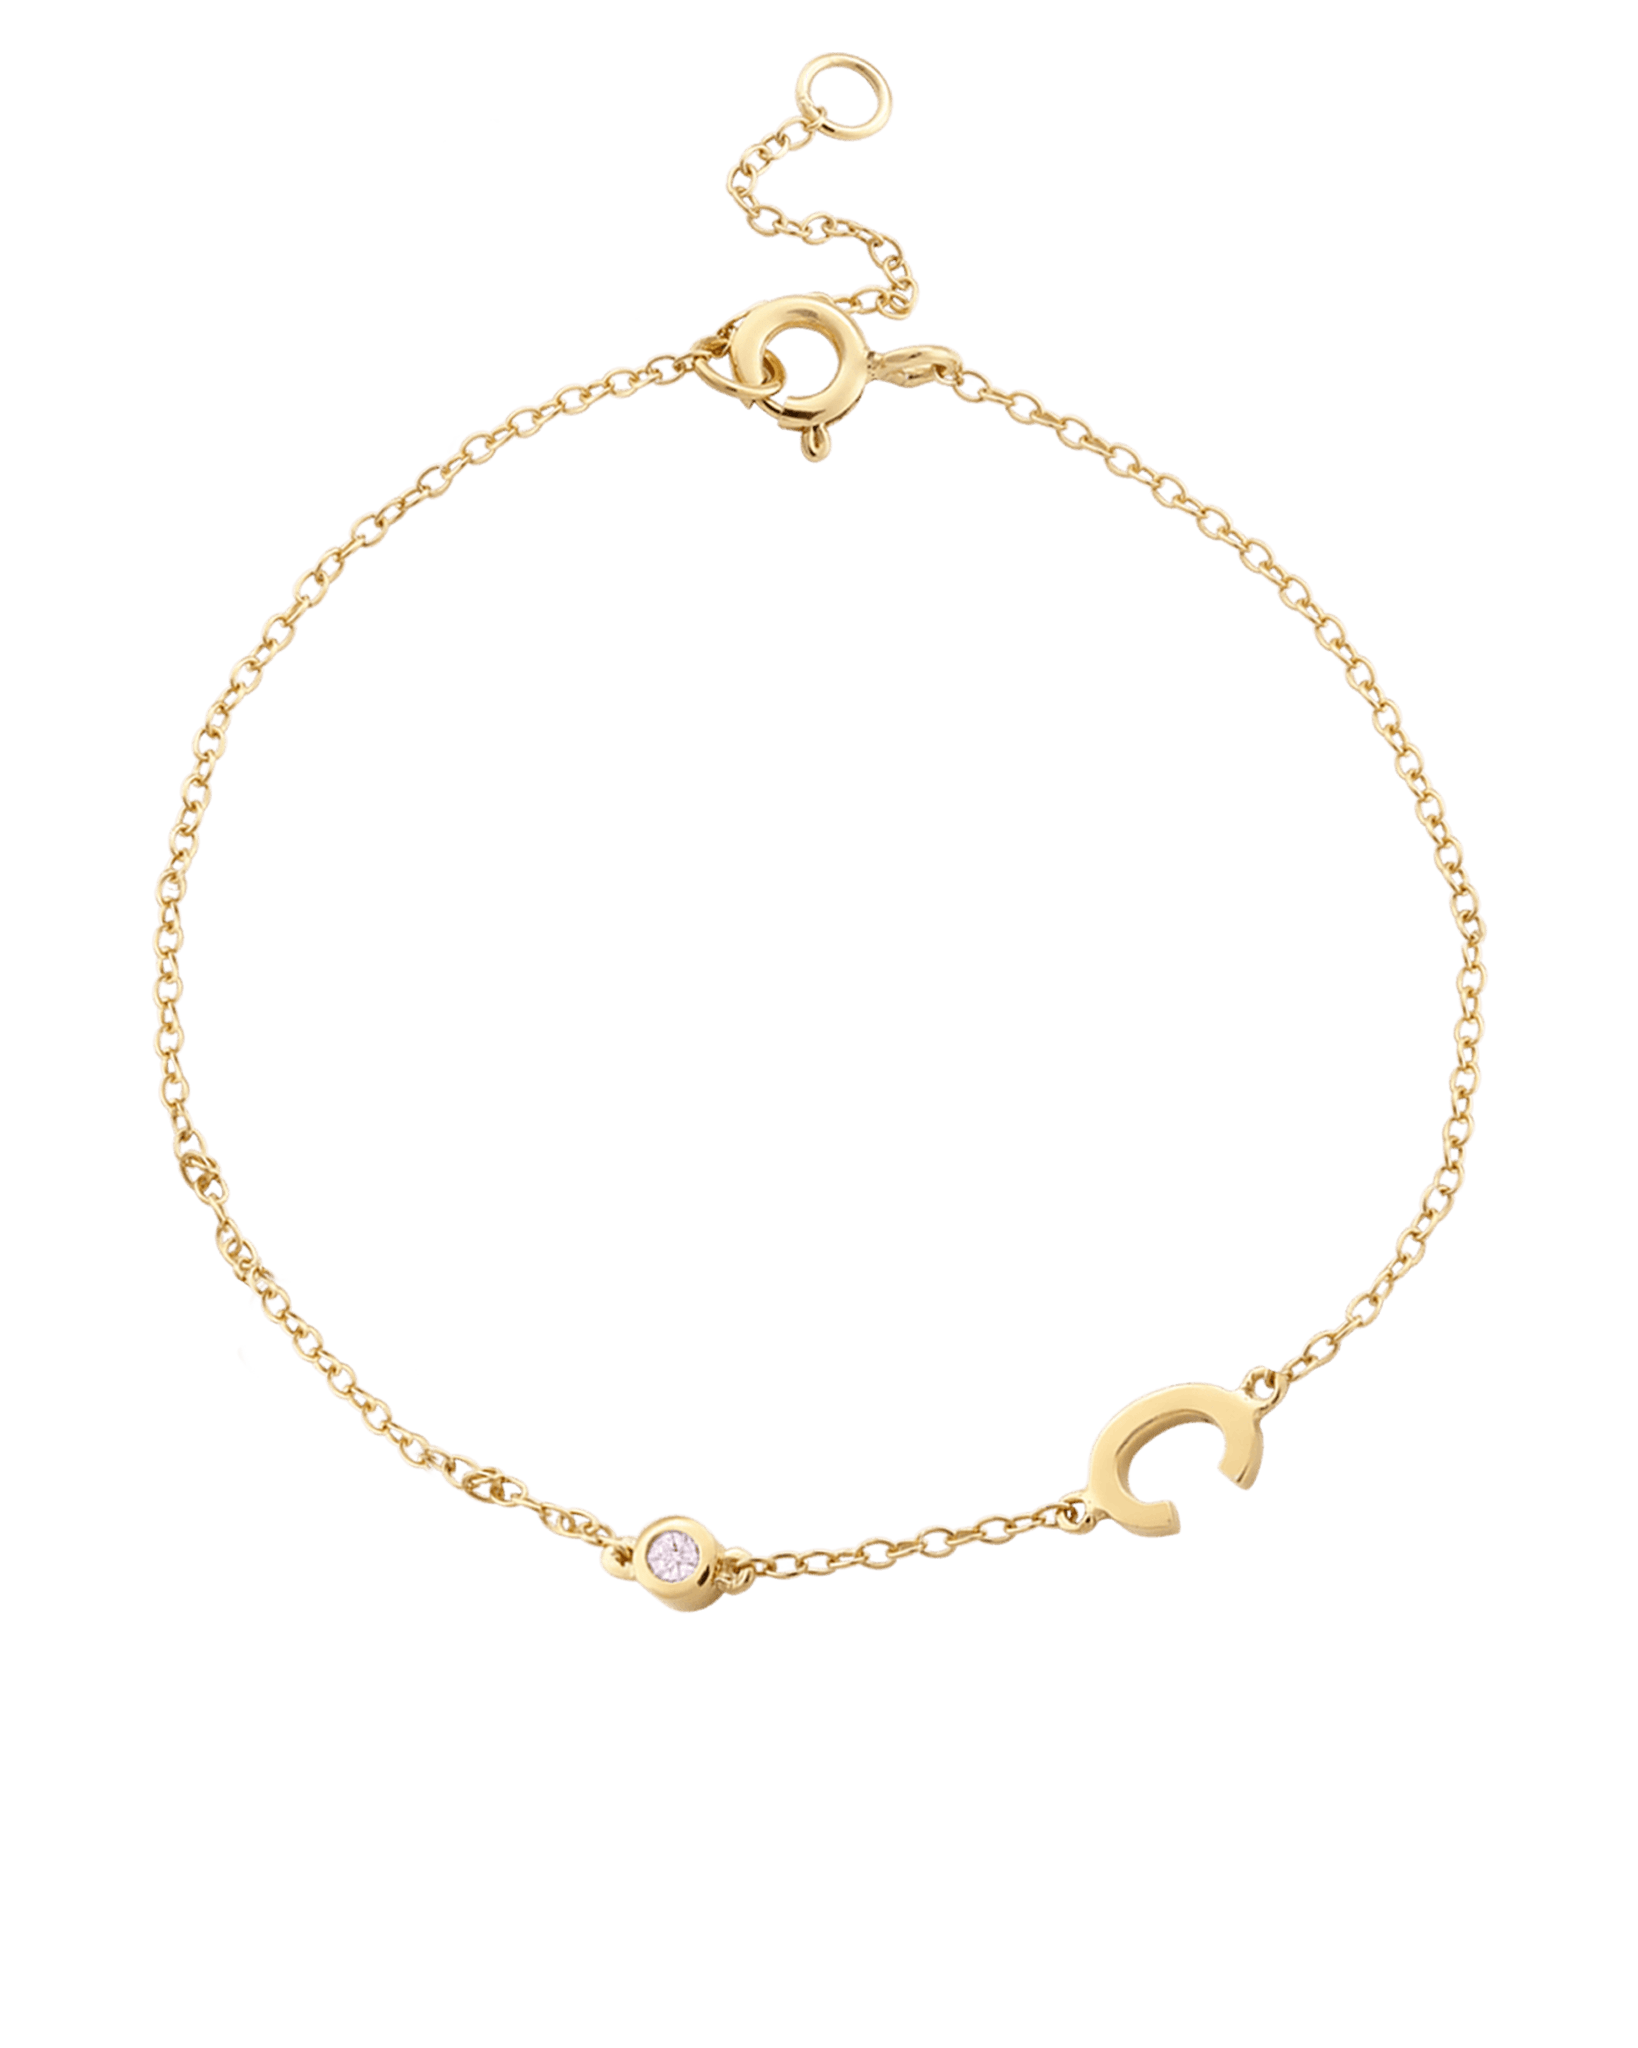 The Initial Bracelet with Diamonds - 14K Yellow Gold Bracelets magal-dev 1 Initial + 1 Diamond 6"-7" (S-M wrist) 